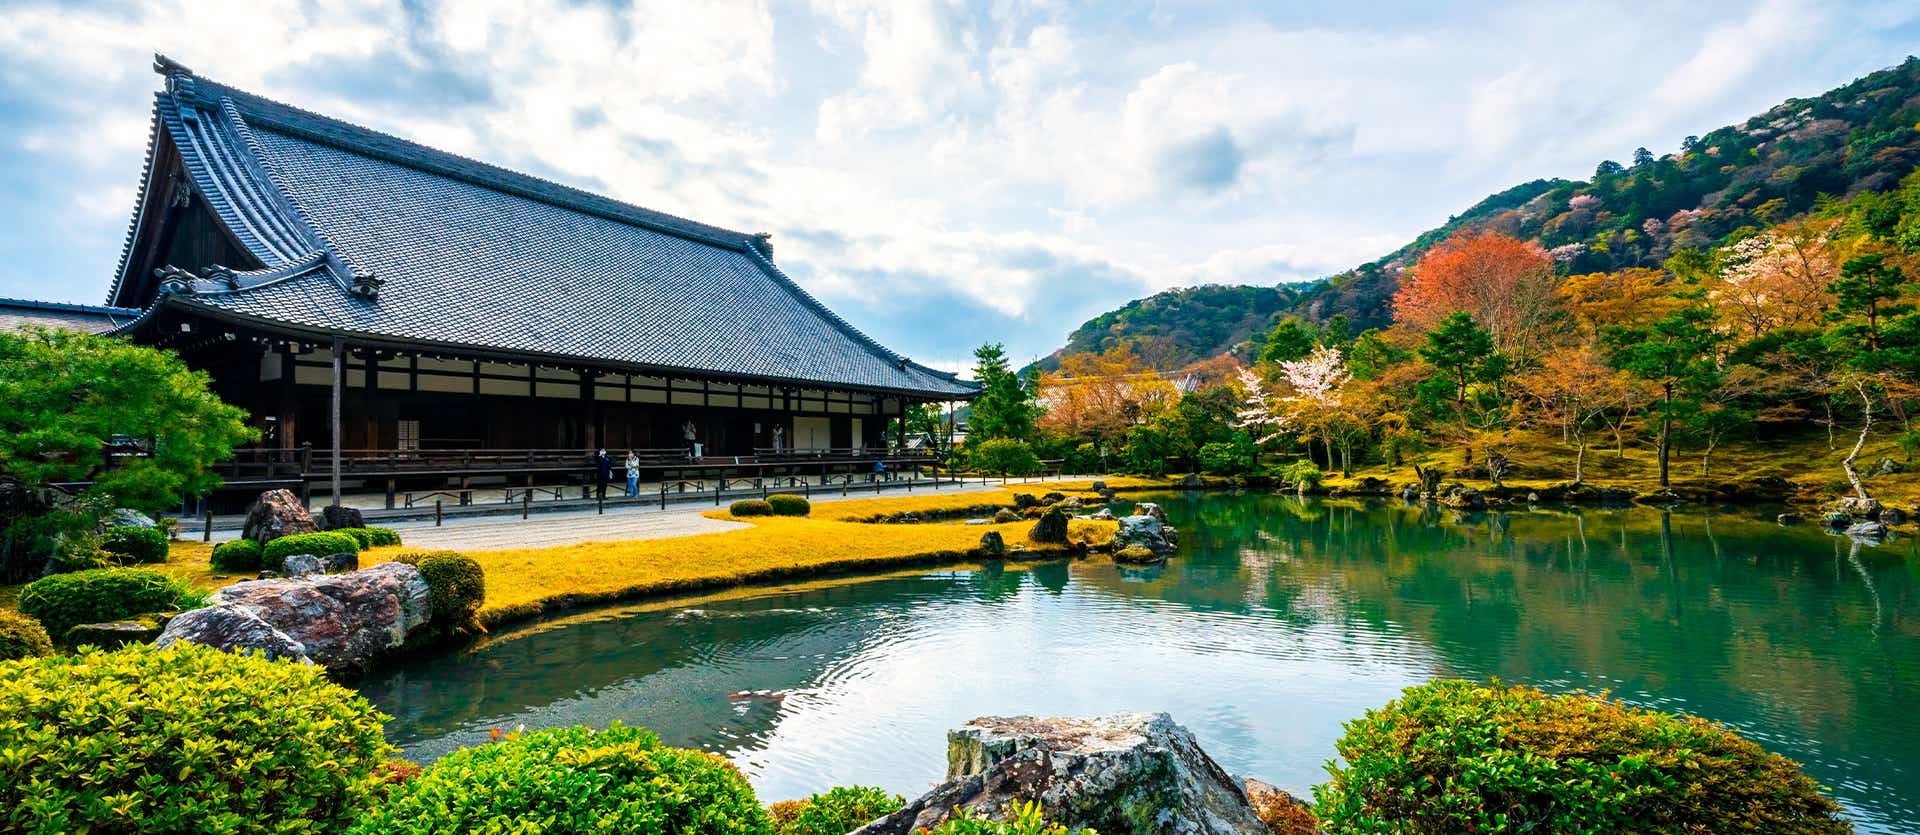 Templo de Tenryuji <span class="iconos separador"></span> Arashiyama <span class="iconos separador"></span> Kioto